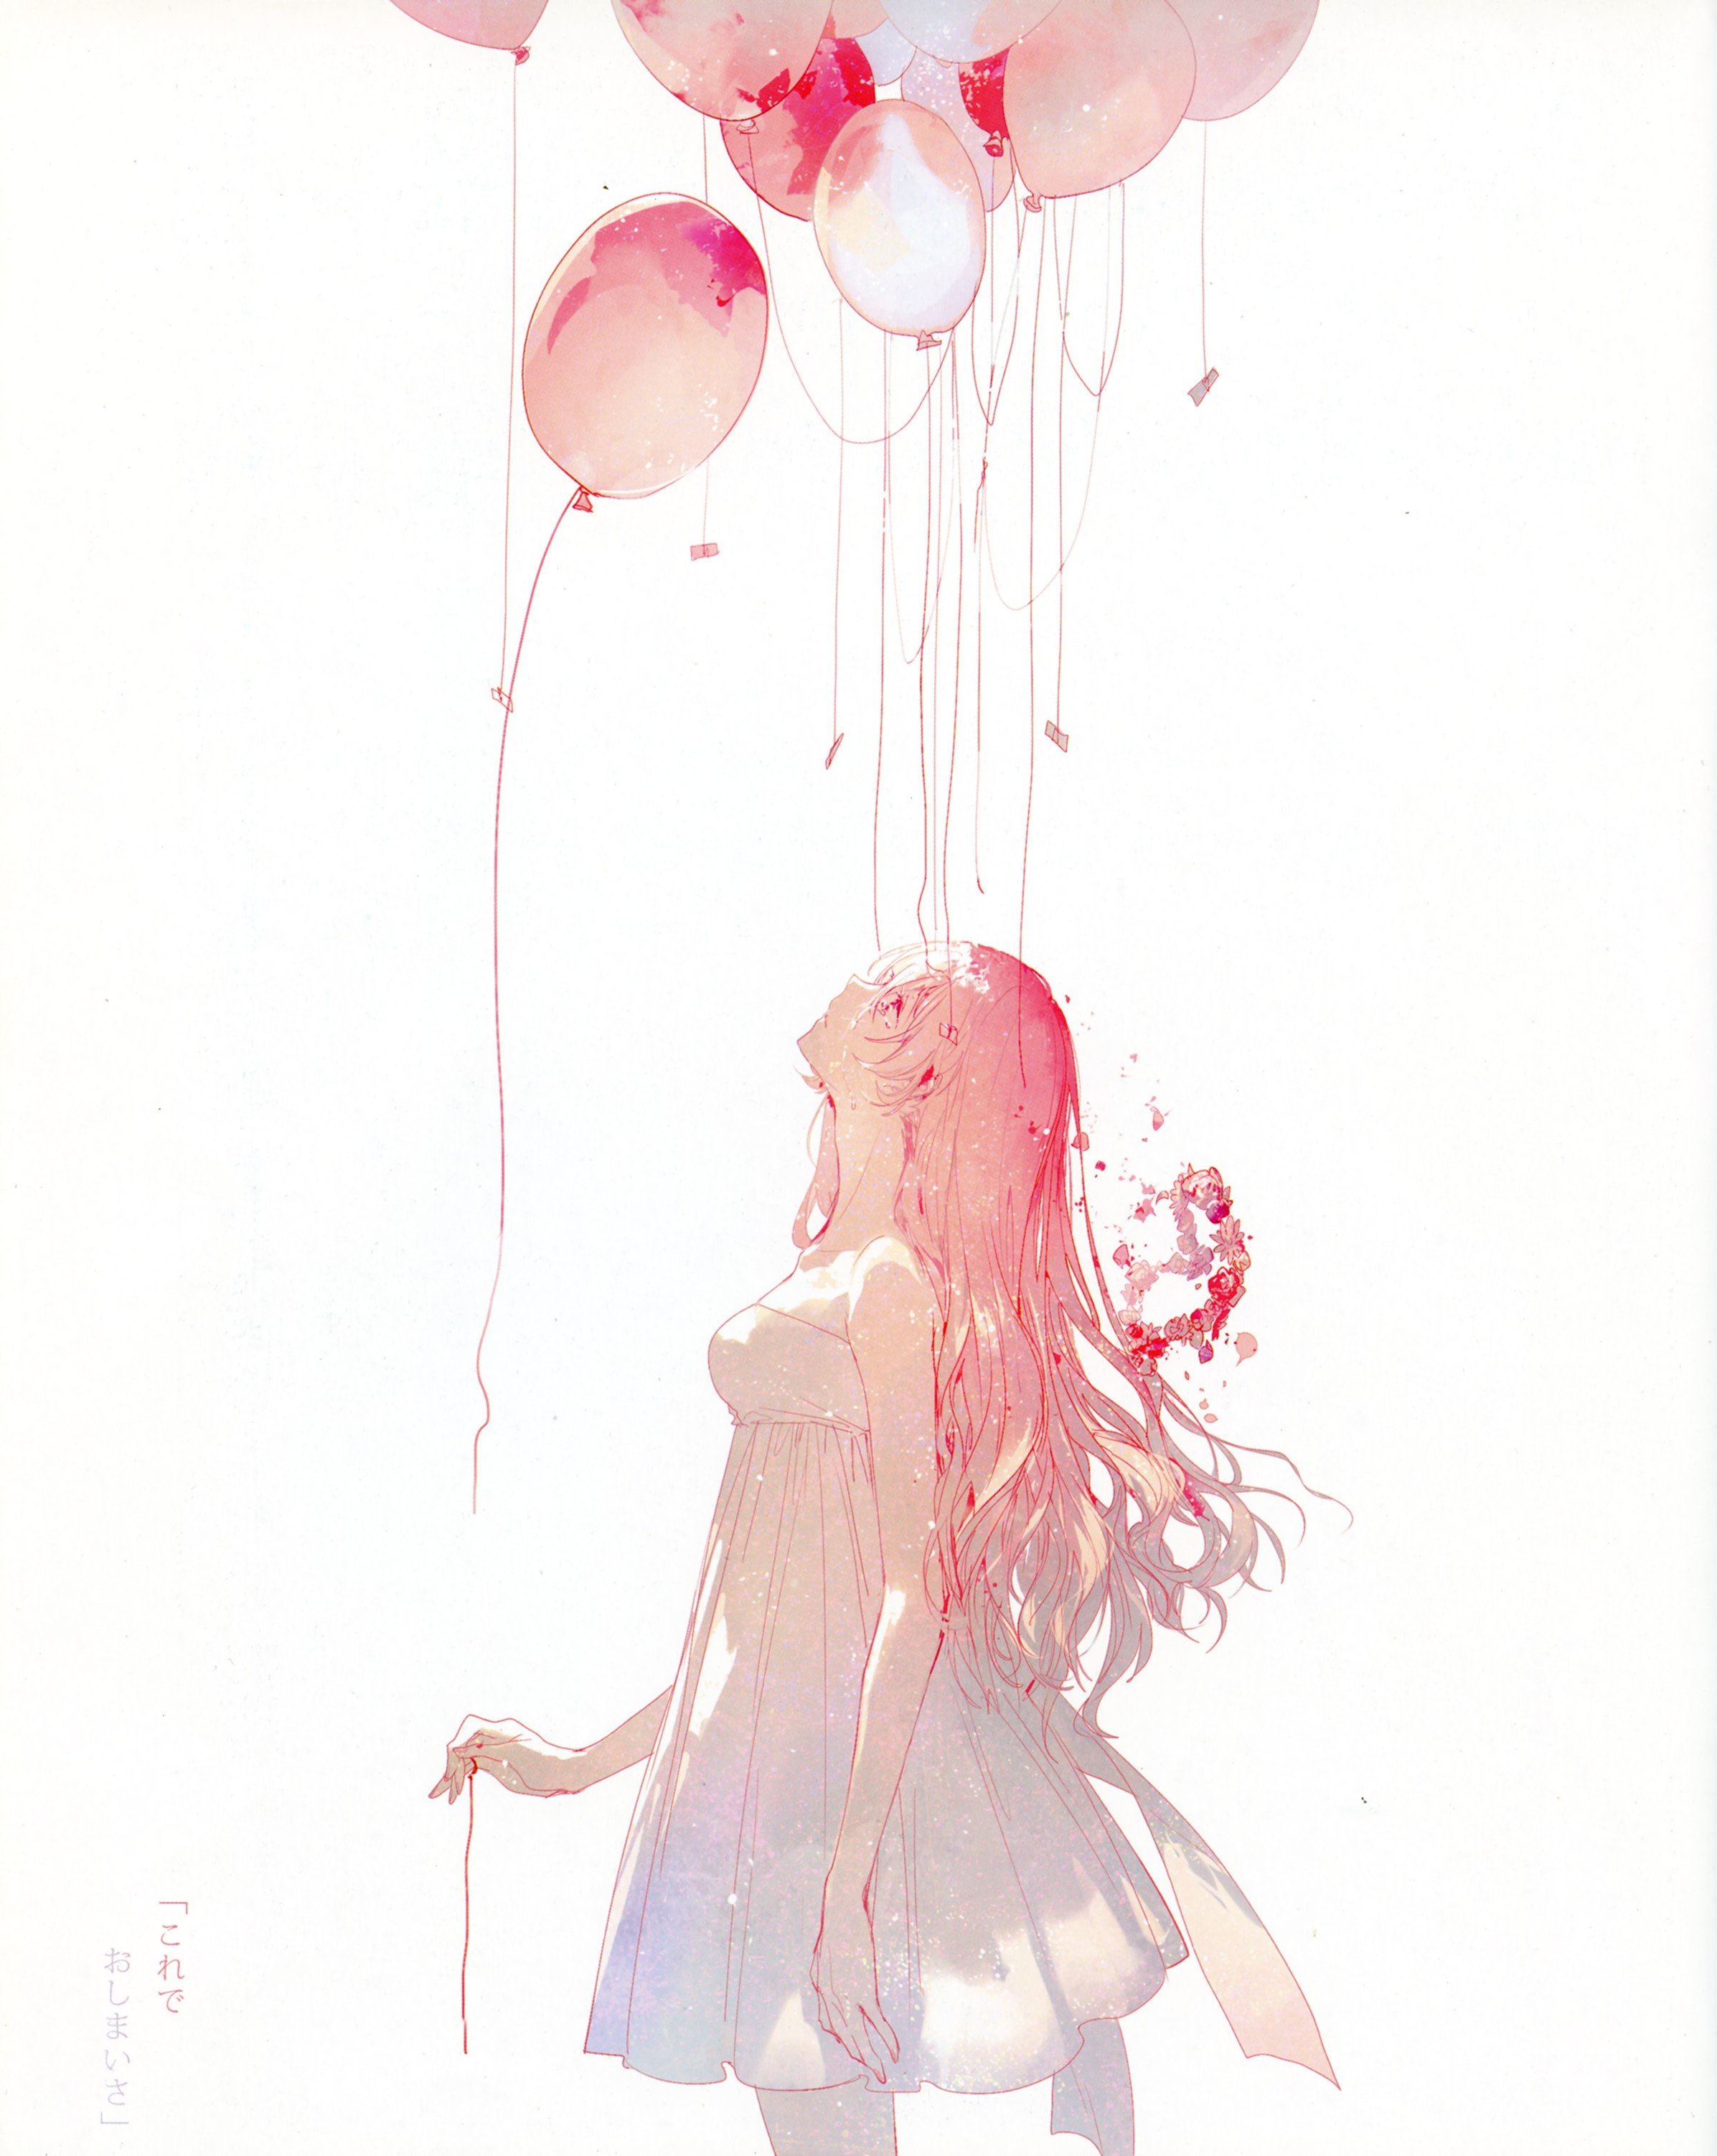 Vocaloid, Megurine Luka, Long hair, White dress, Balloons, Crying, Flowers, Anime girls, Anime Wallpaper